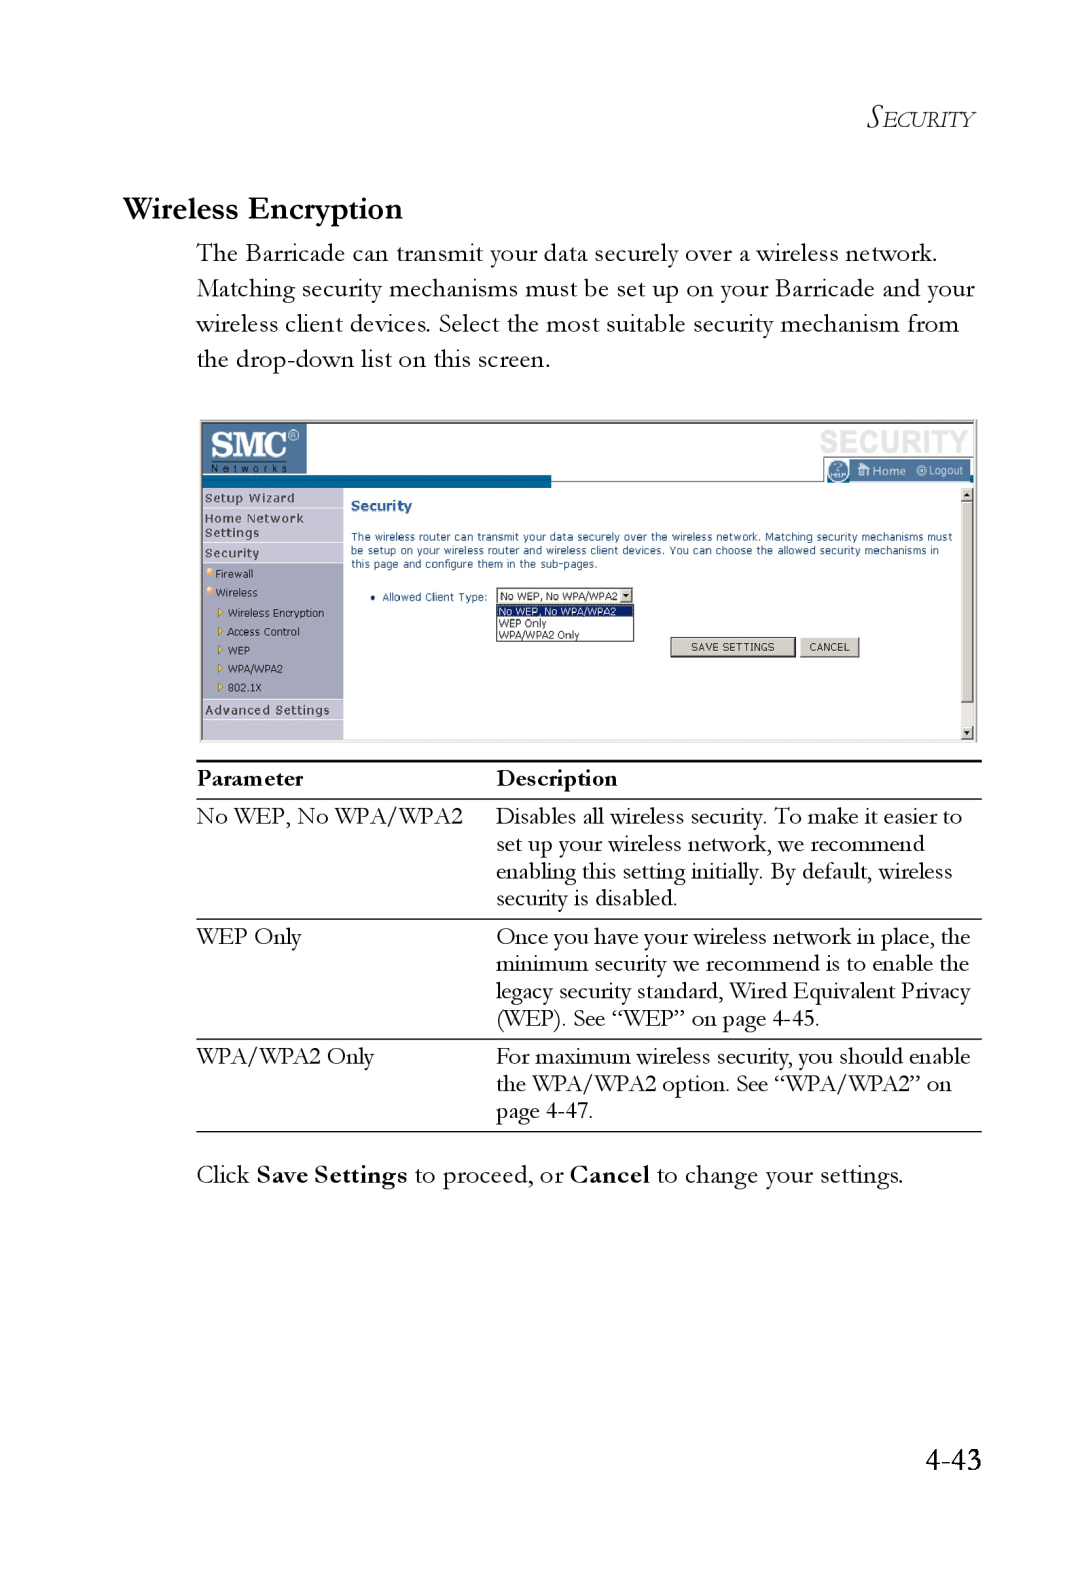 SMC Networks SMCWBR14T-G manual 4-43, Wireless Encryption 